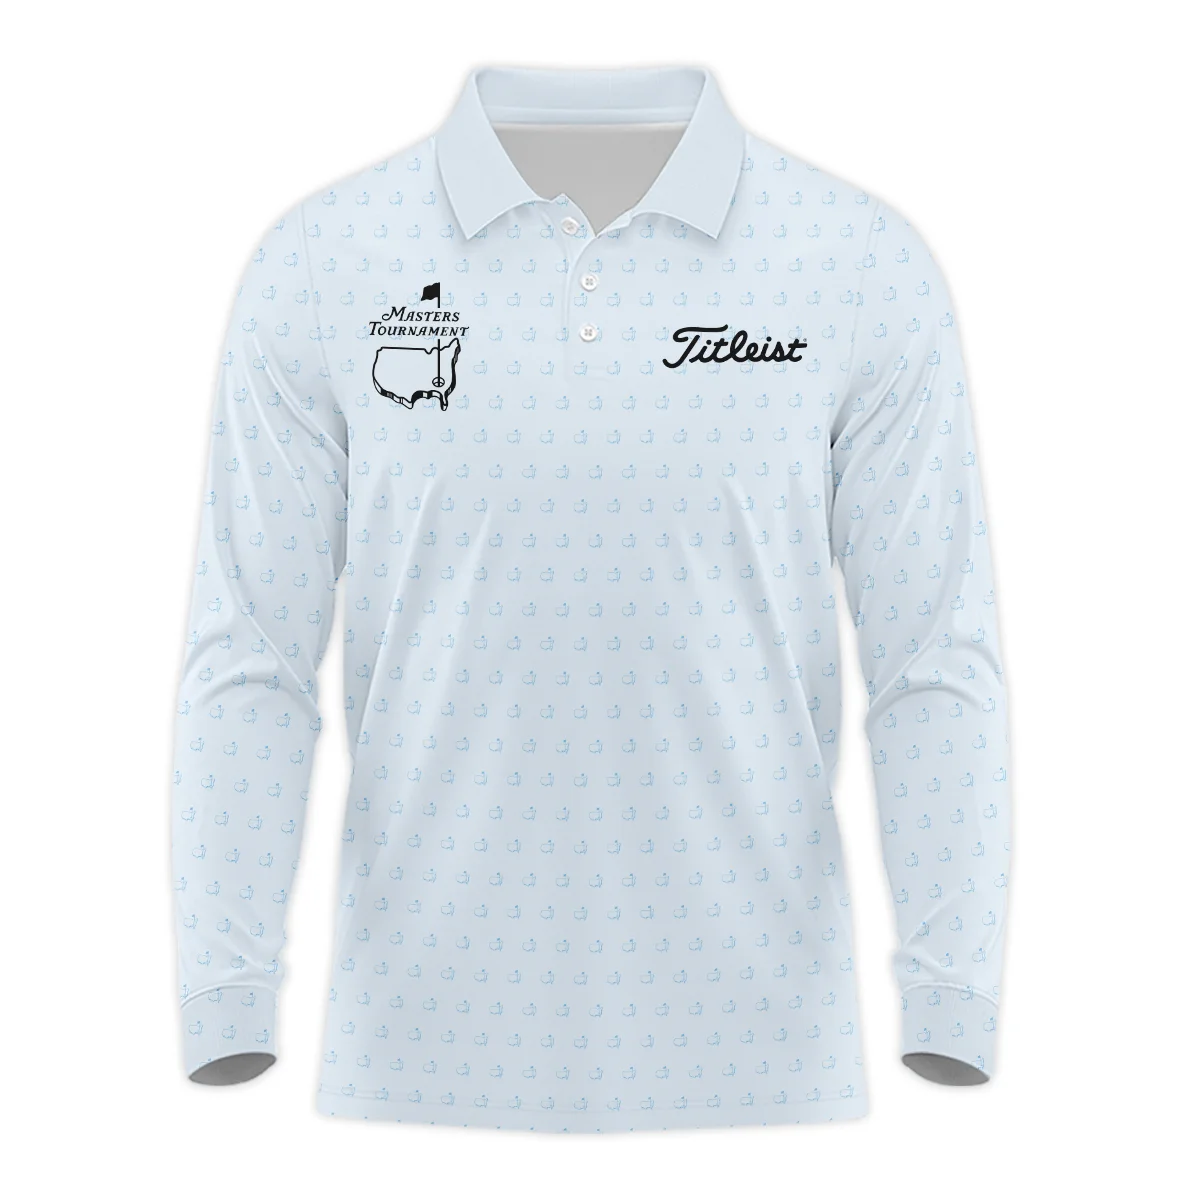 Pattern Masters Tournament Titleist Sleeveless Jacket White Light Blue Color Pattern Logo  Sleeveless Jacket